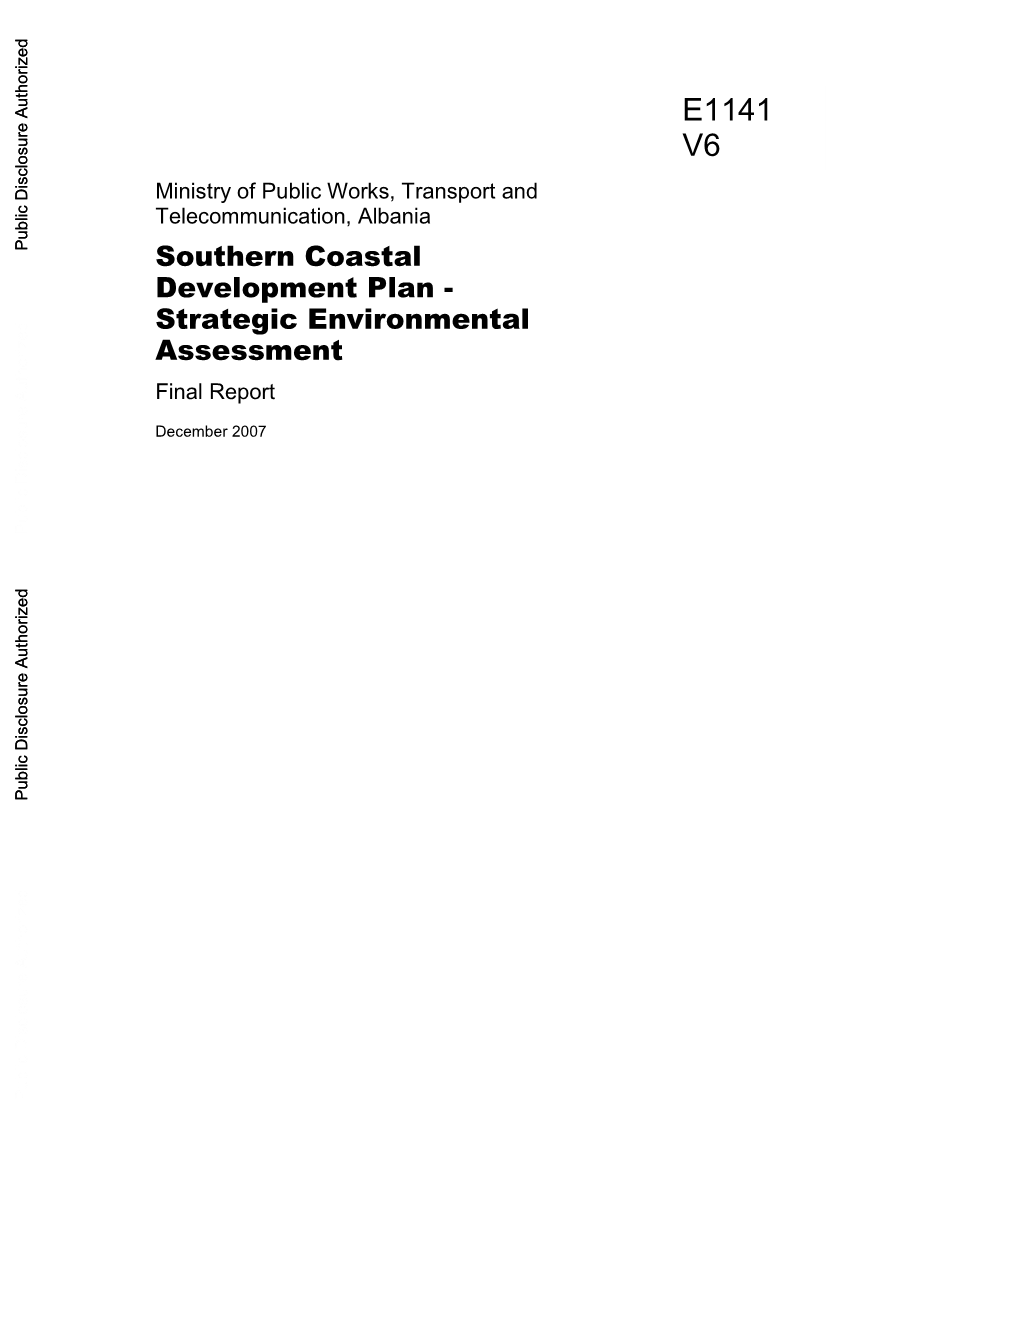 Southern Coastal Development Plan - Strategic Environmental Assessment Final Report